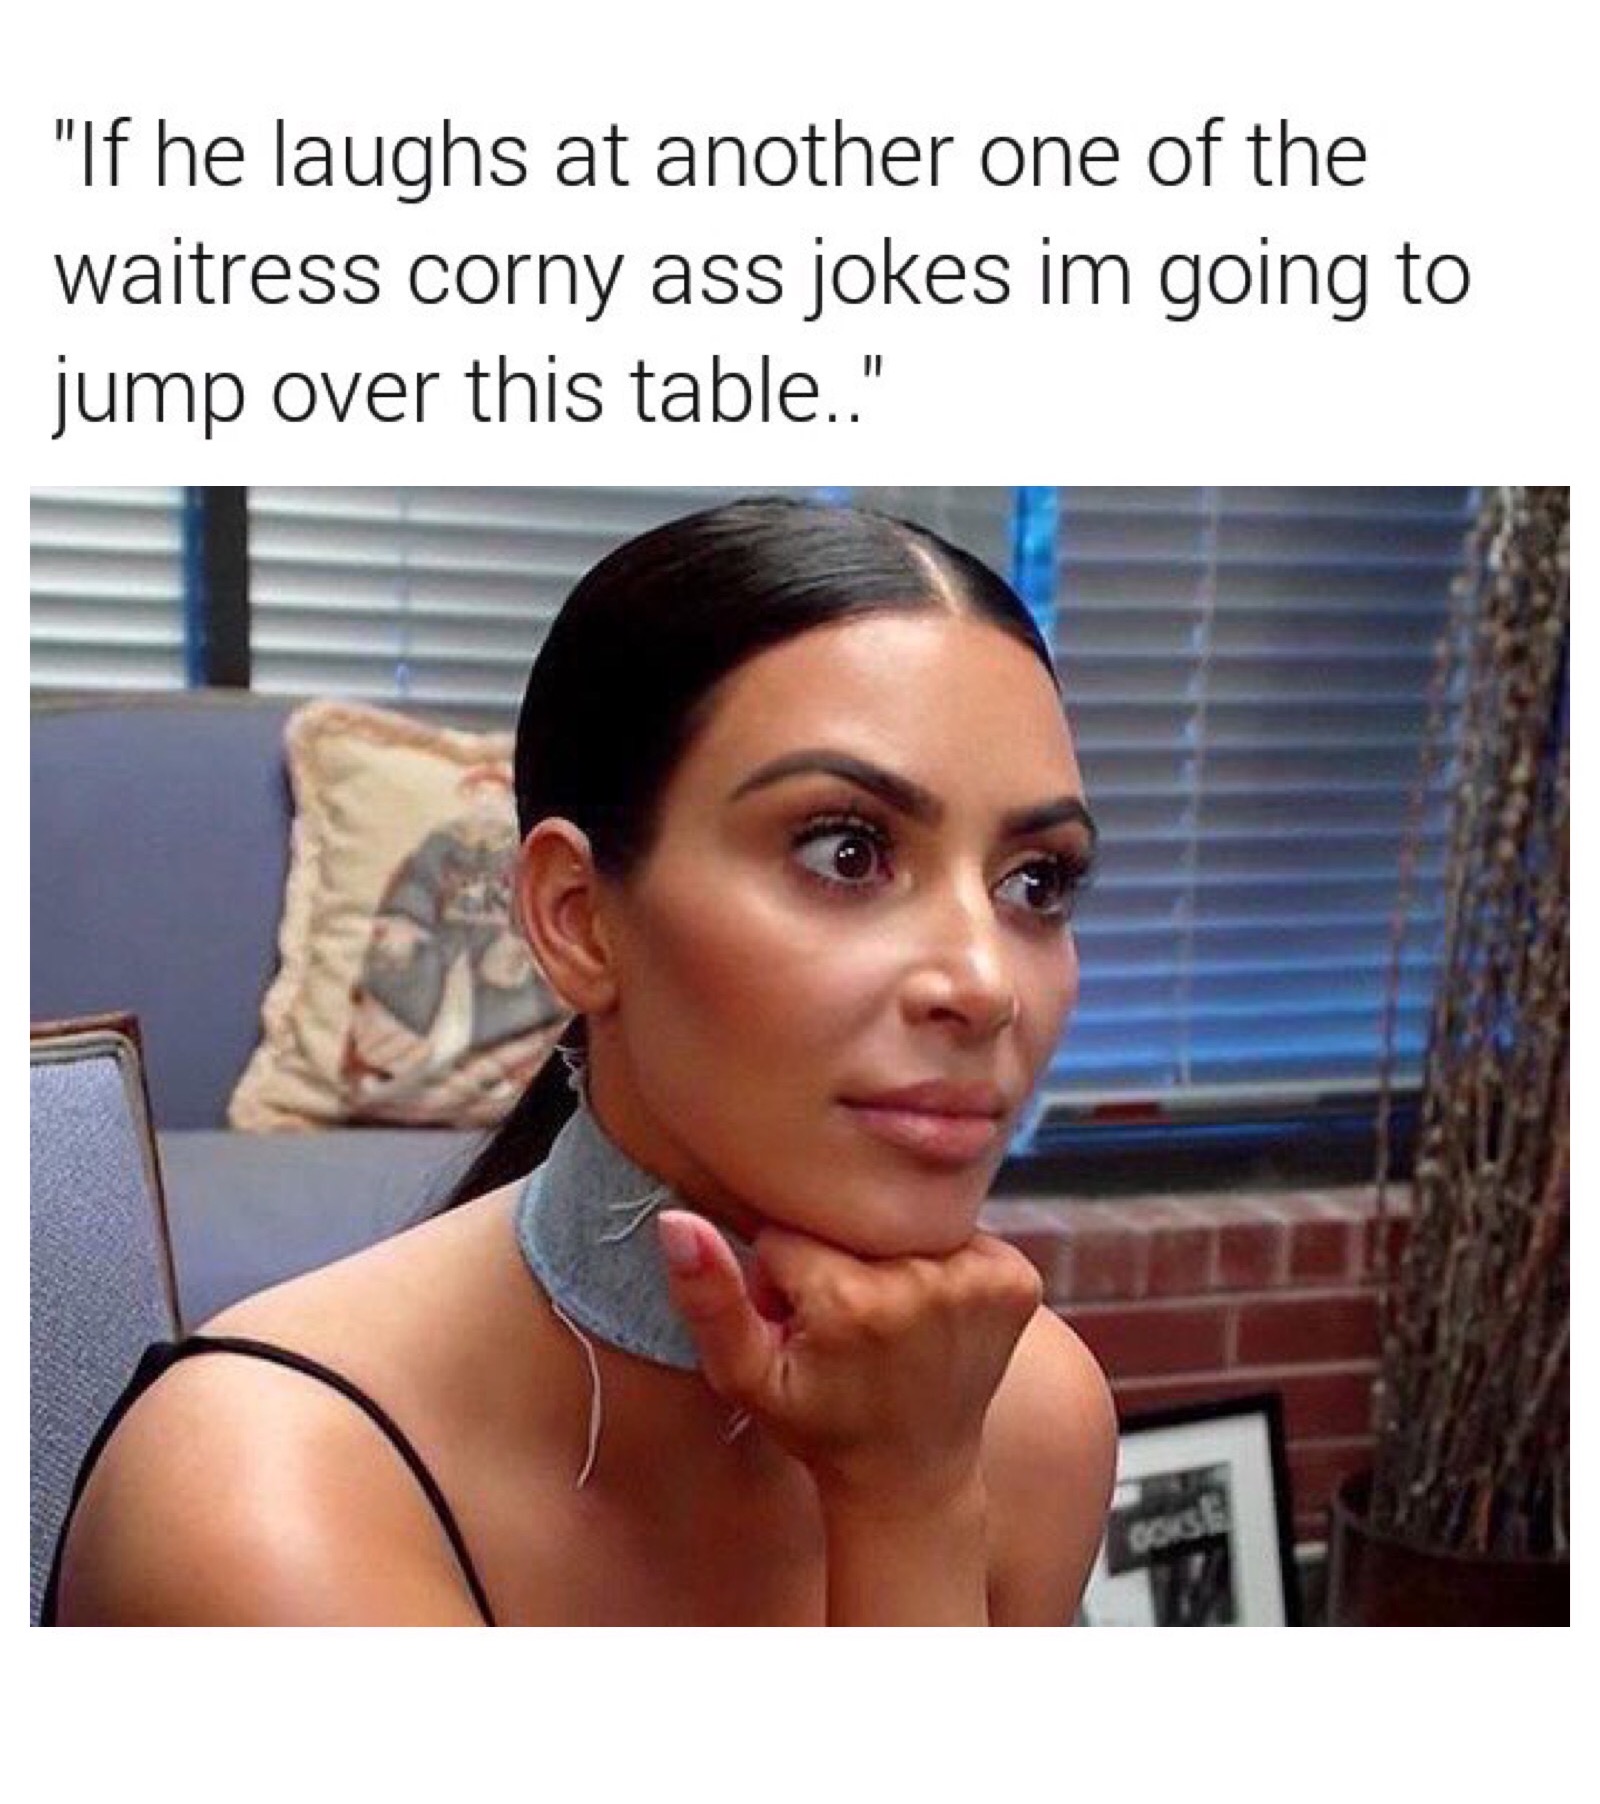 A shocked Kim Kardashian as the feeling when he laughs at the corny jokes the waitress keeps making.